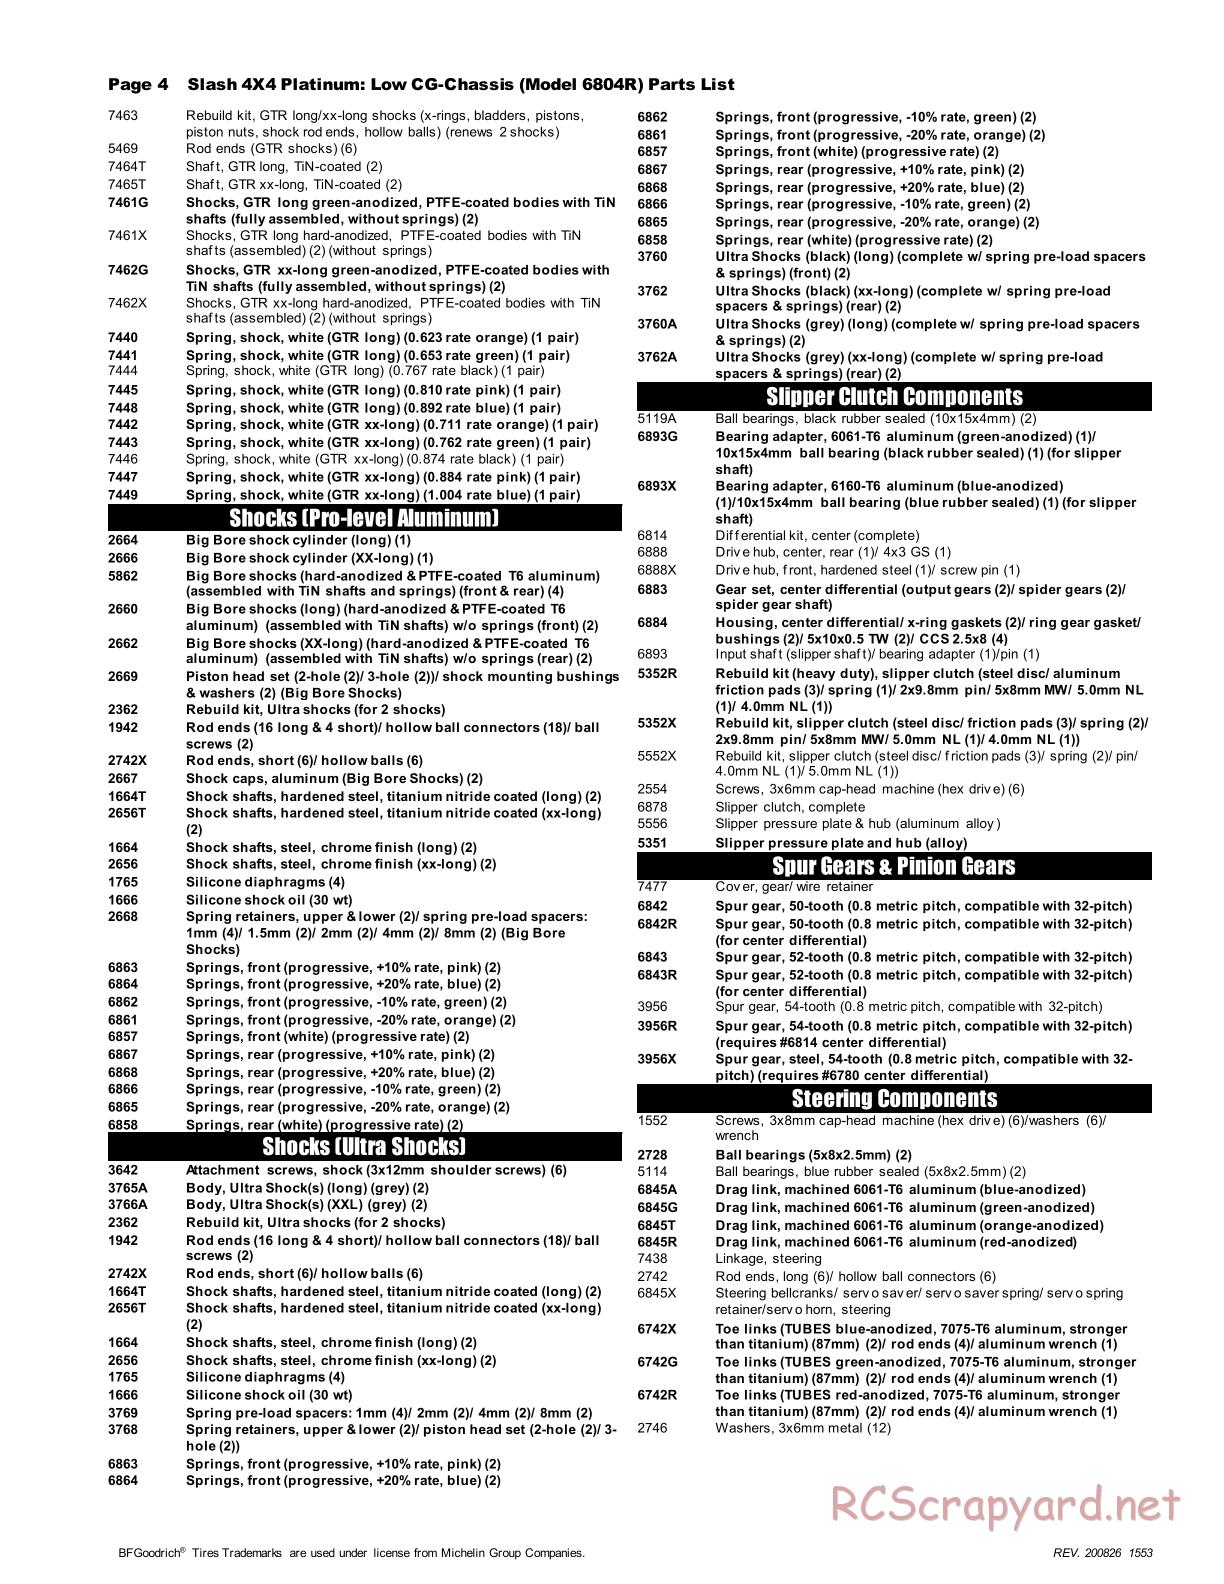 Traxxas - Slash 4x4 Platinum Ed (2012) - Parts List - Page 4